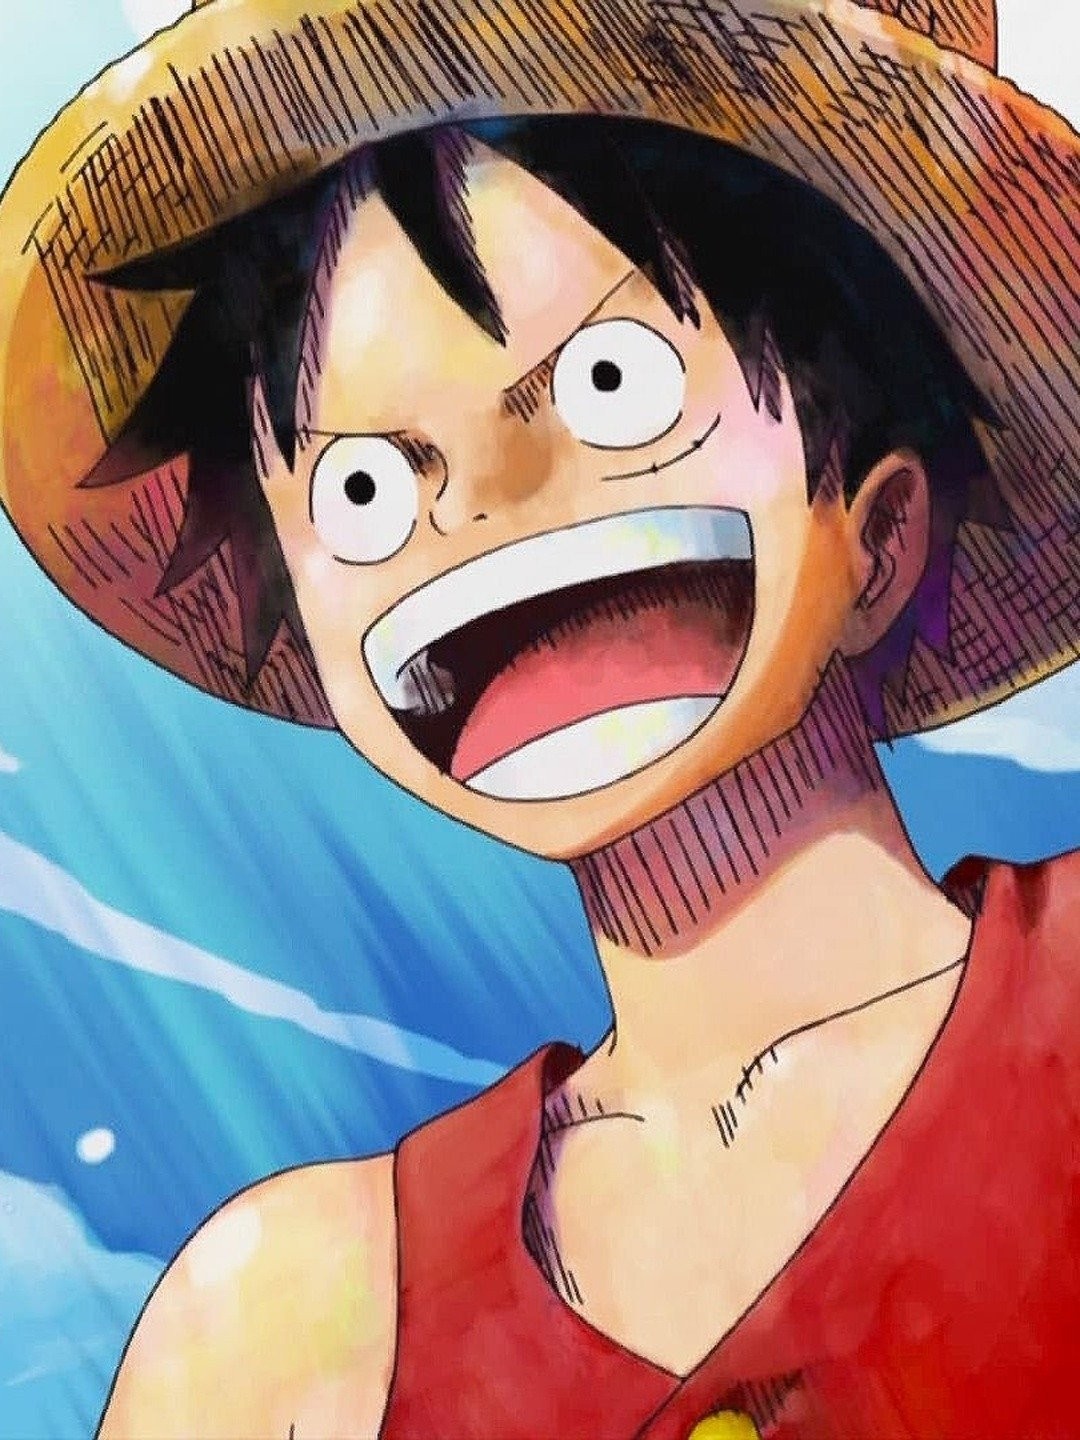 Brook Voice - One Piece: Episode of Luffy: Adventure on Hand